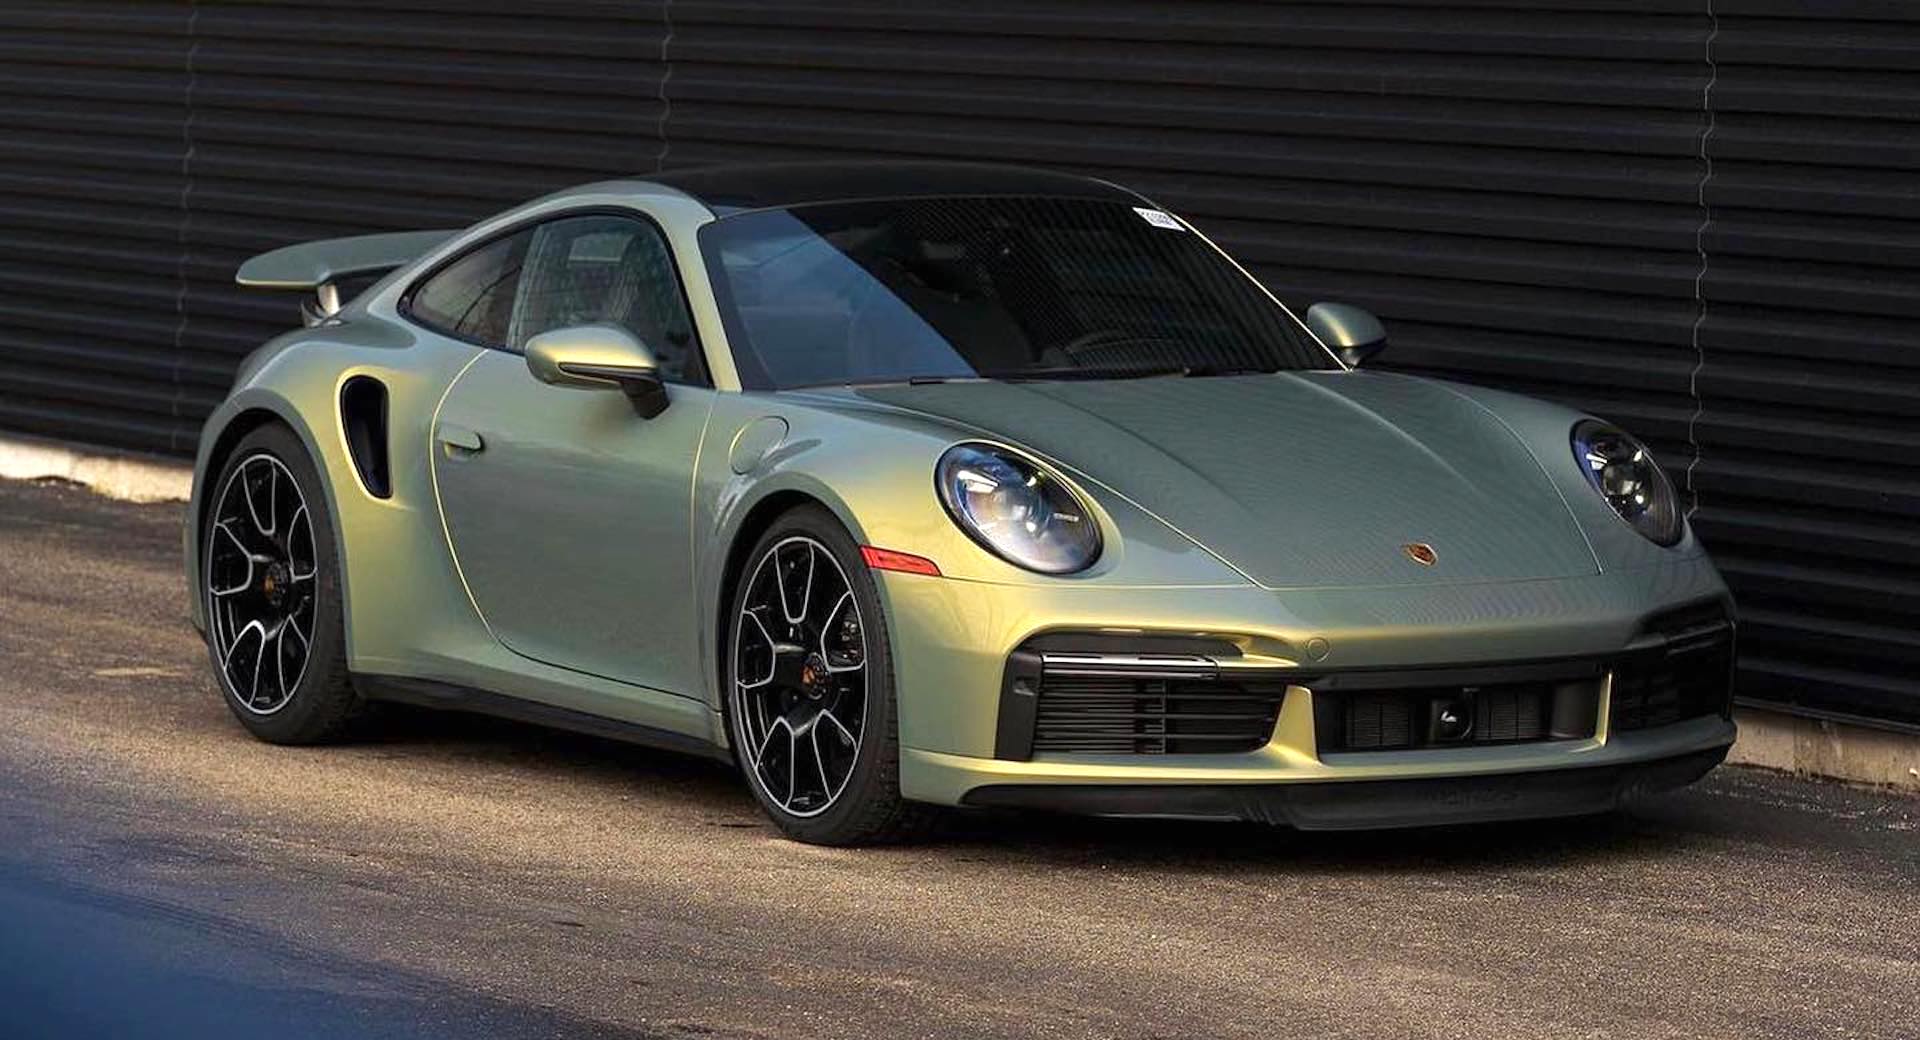 Porsche 911 Latest News Carscoops